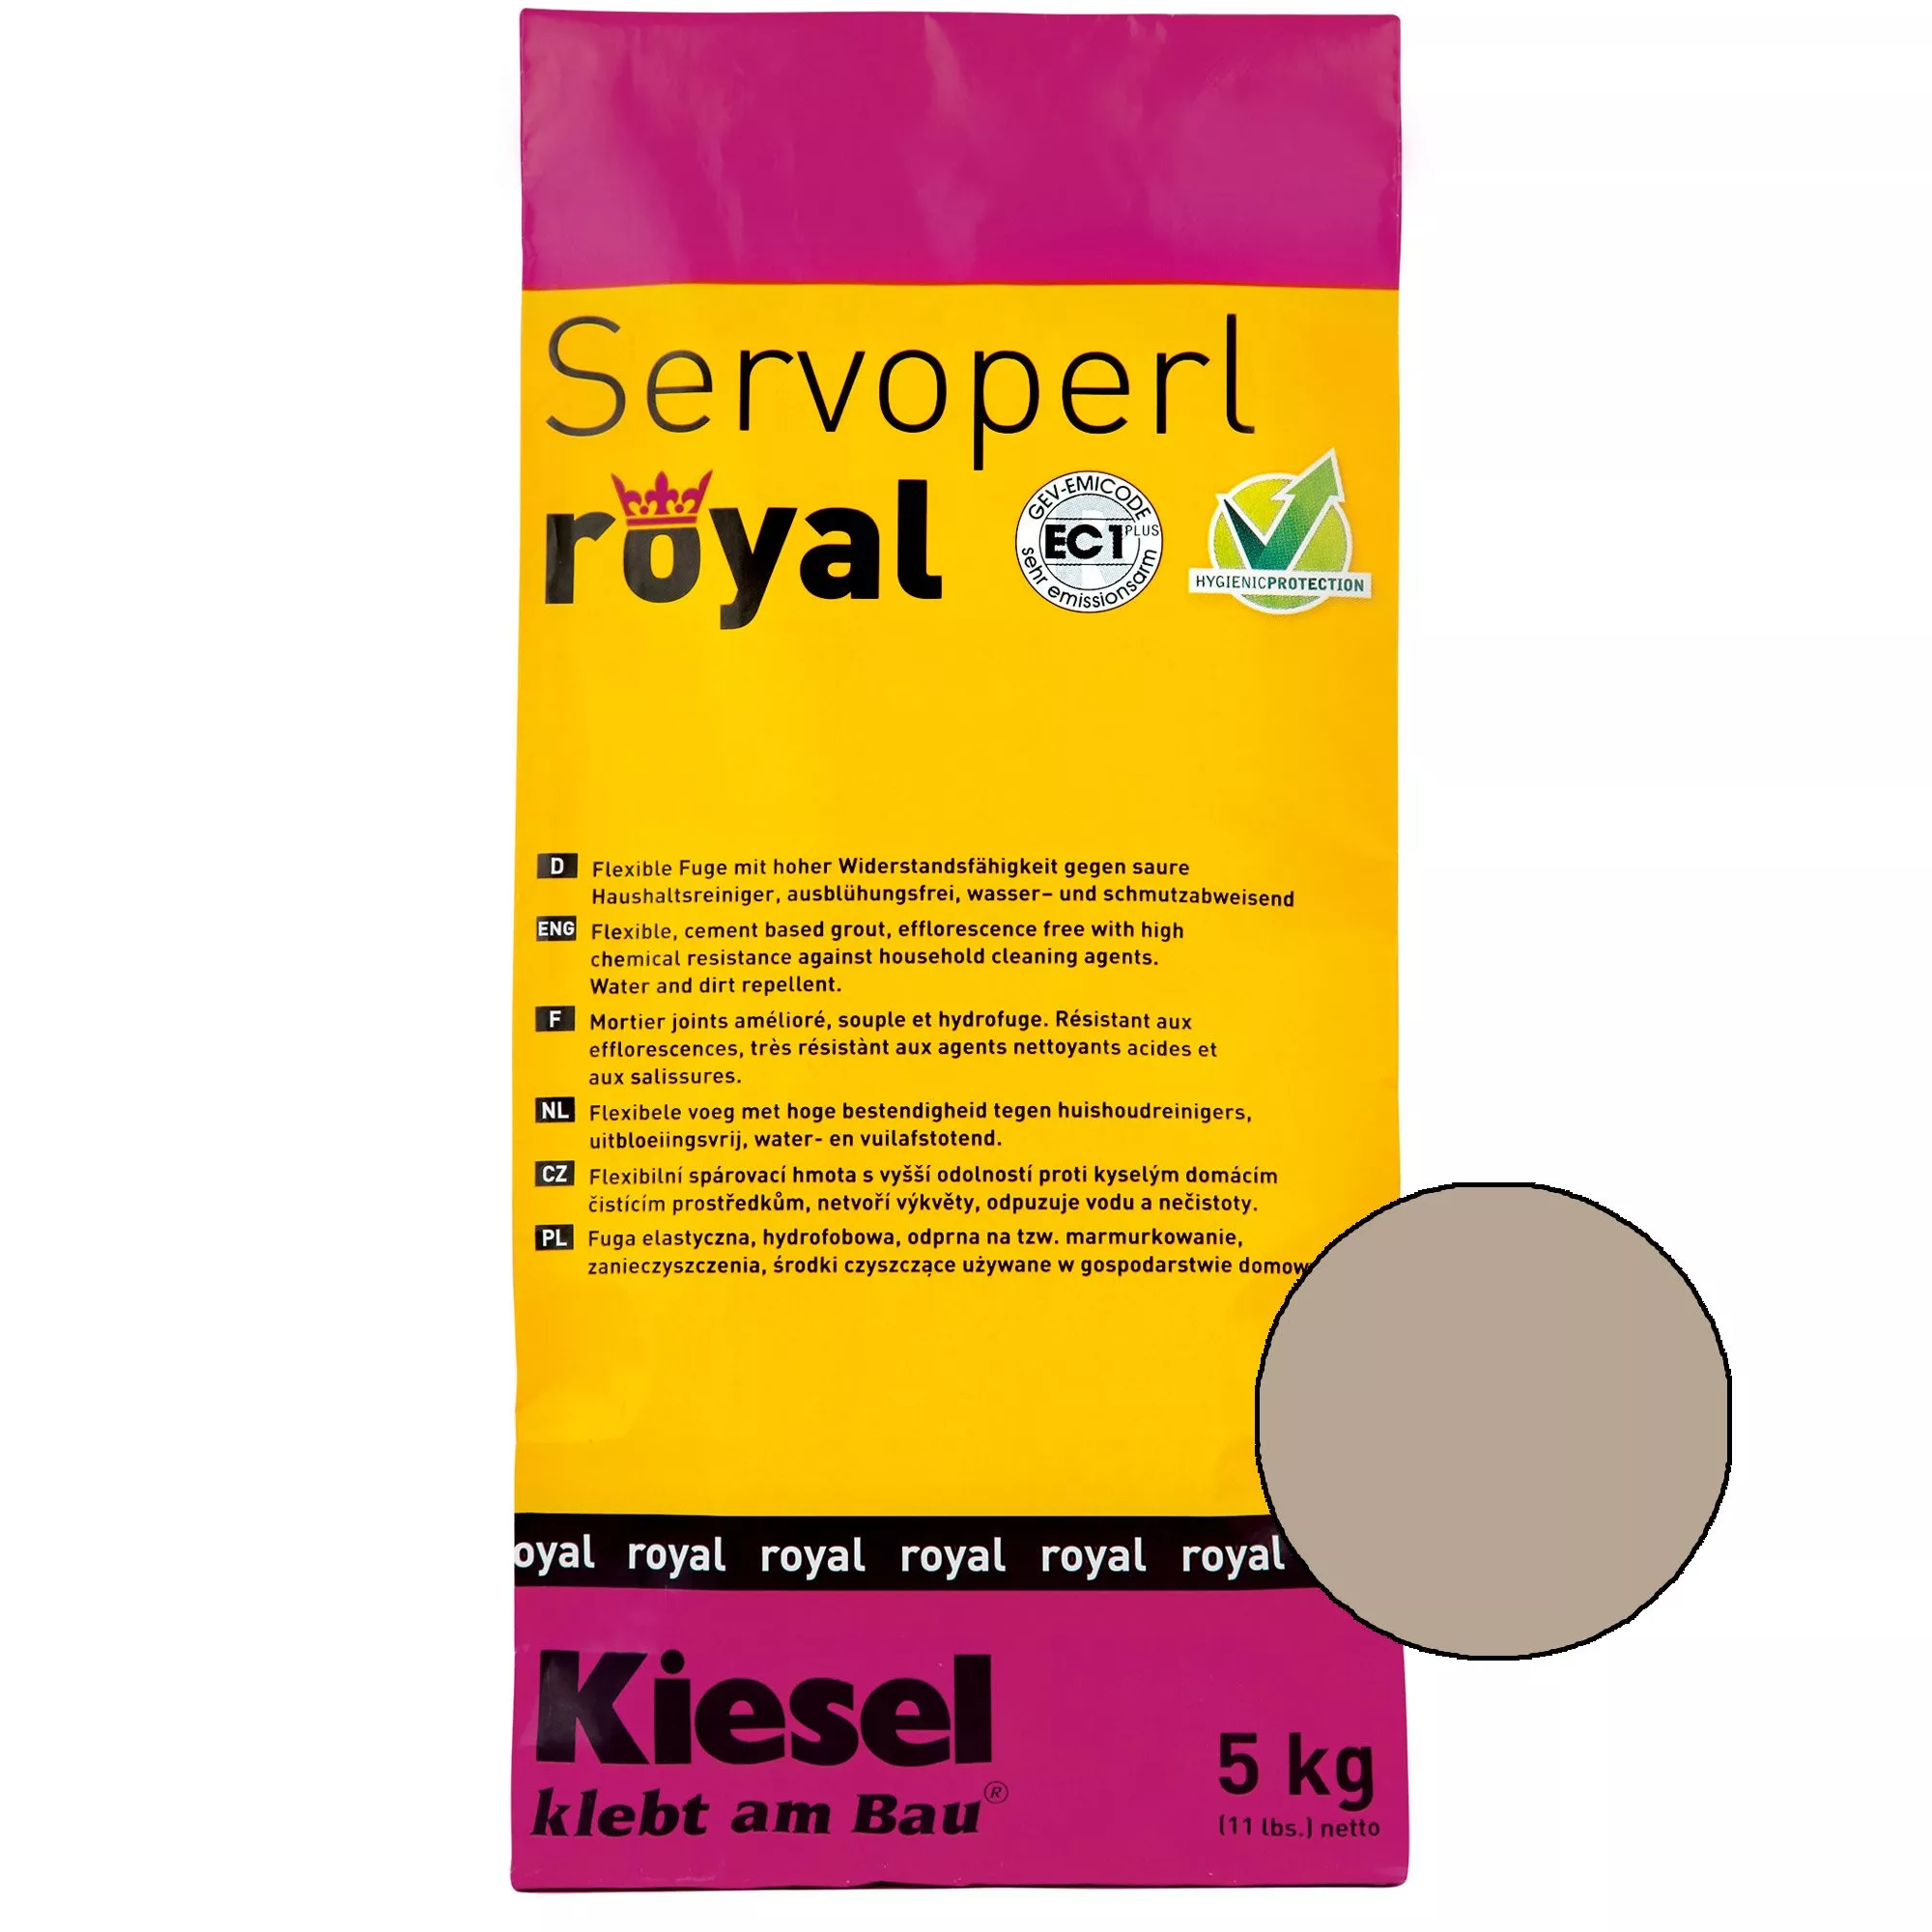 Kiesel Servoperl royal - saumaseos -5 kg Mochacino